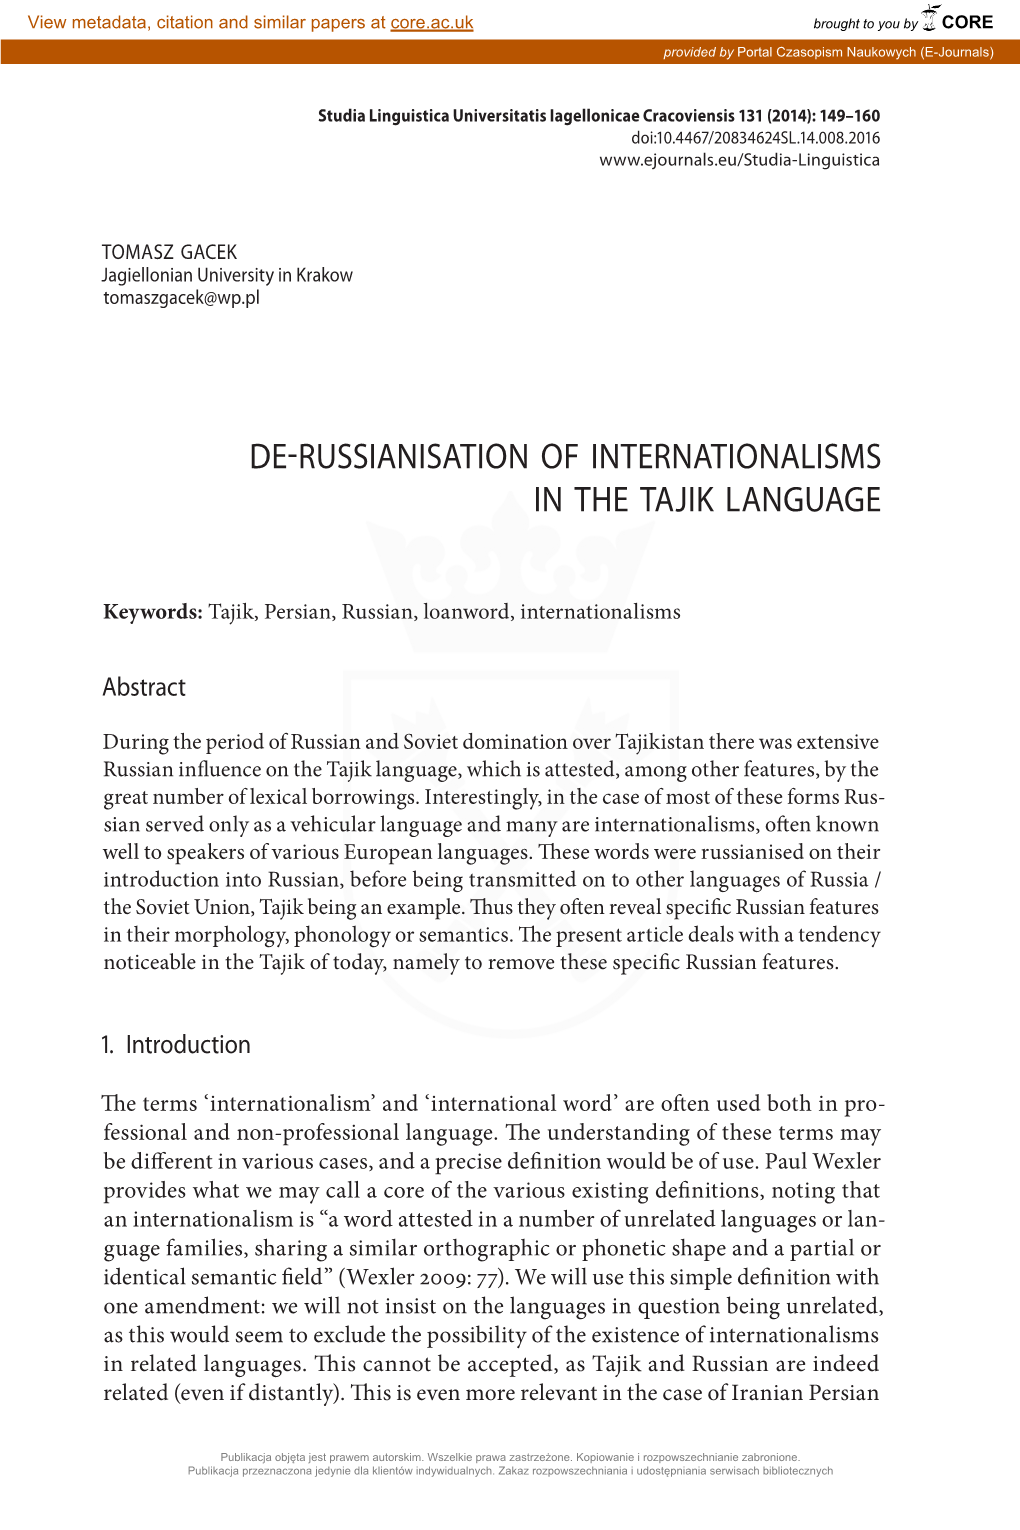 De-Russianisation of Internationalisms in the Tajik Language